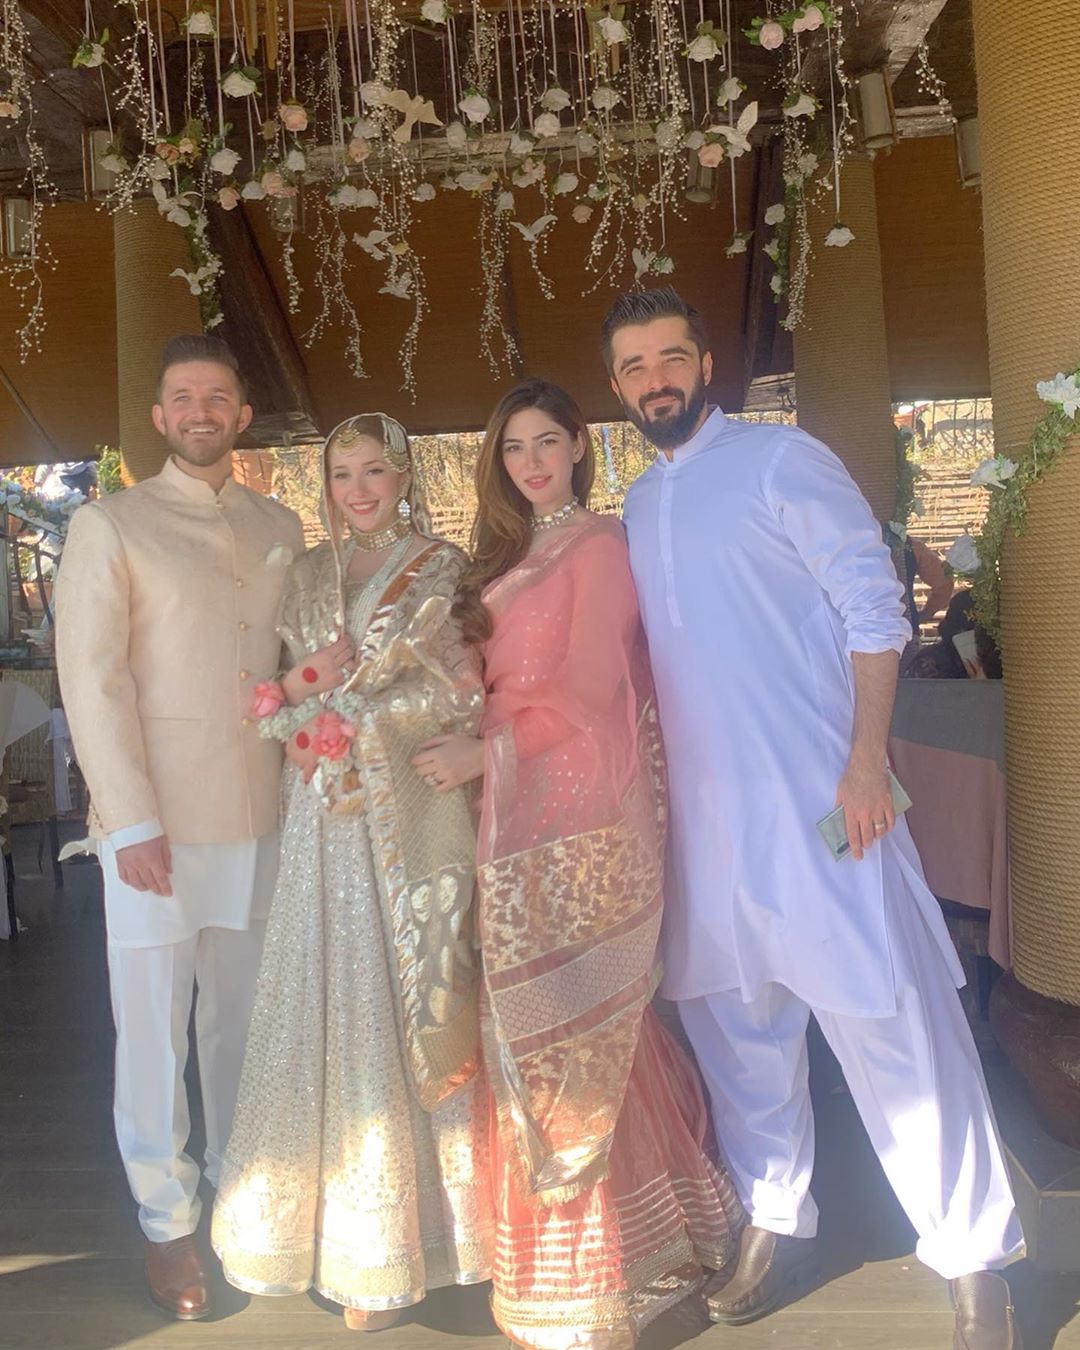 Beautiful Pakistani Celebrities on Their Sisters Wedding